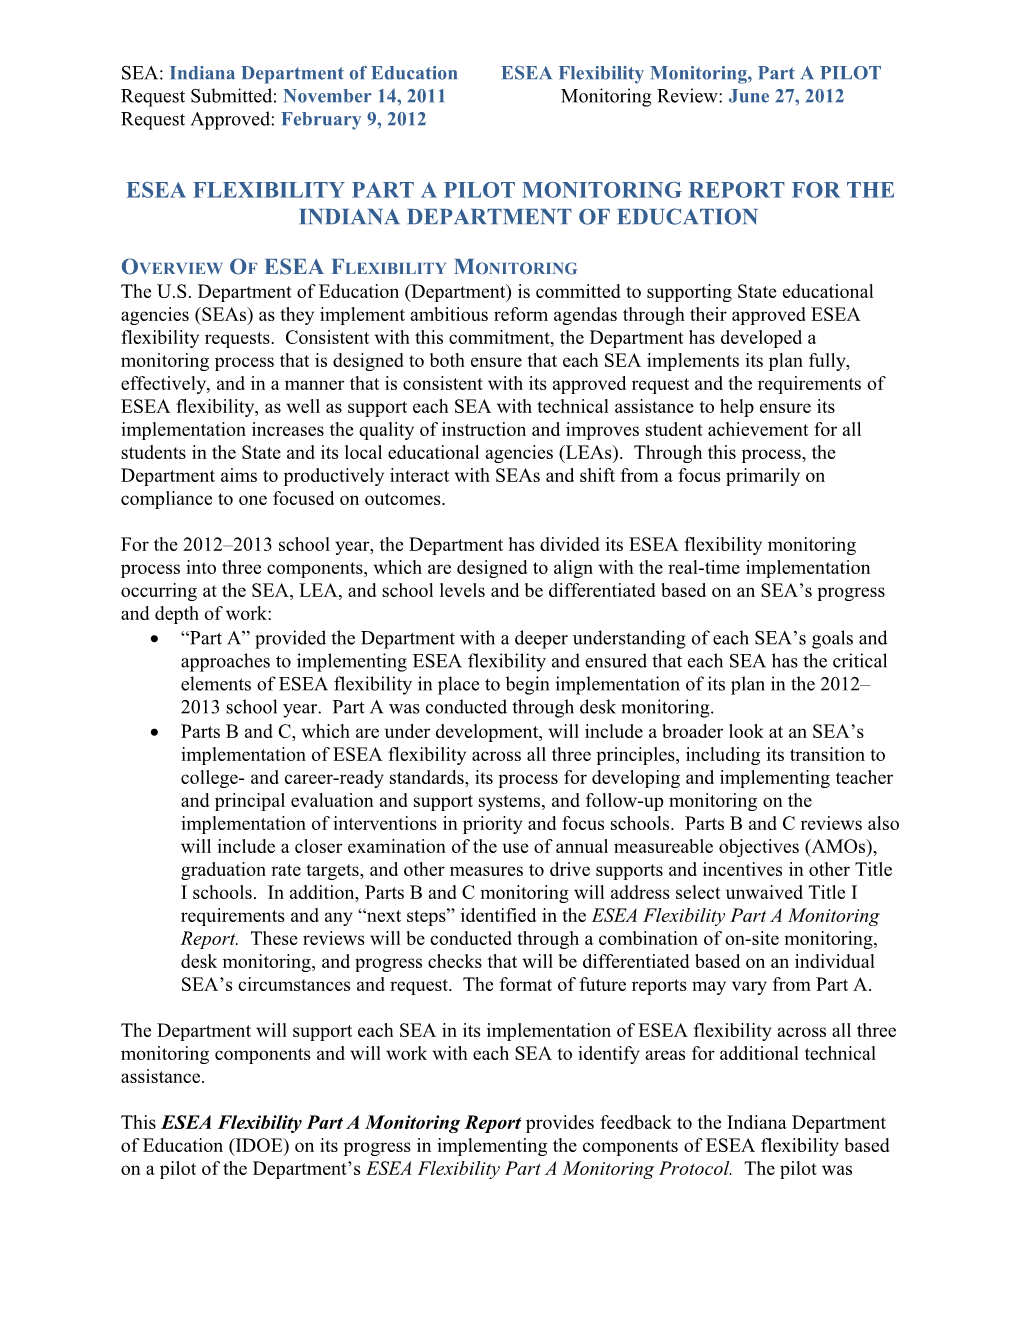 Indiana ESEA Flexibility Part a Monitoring Report